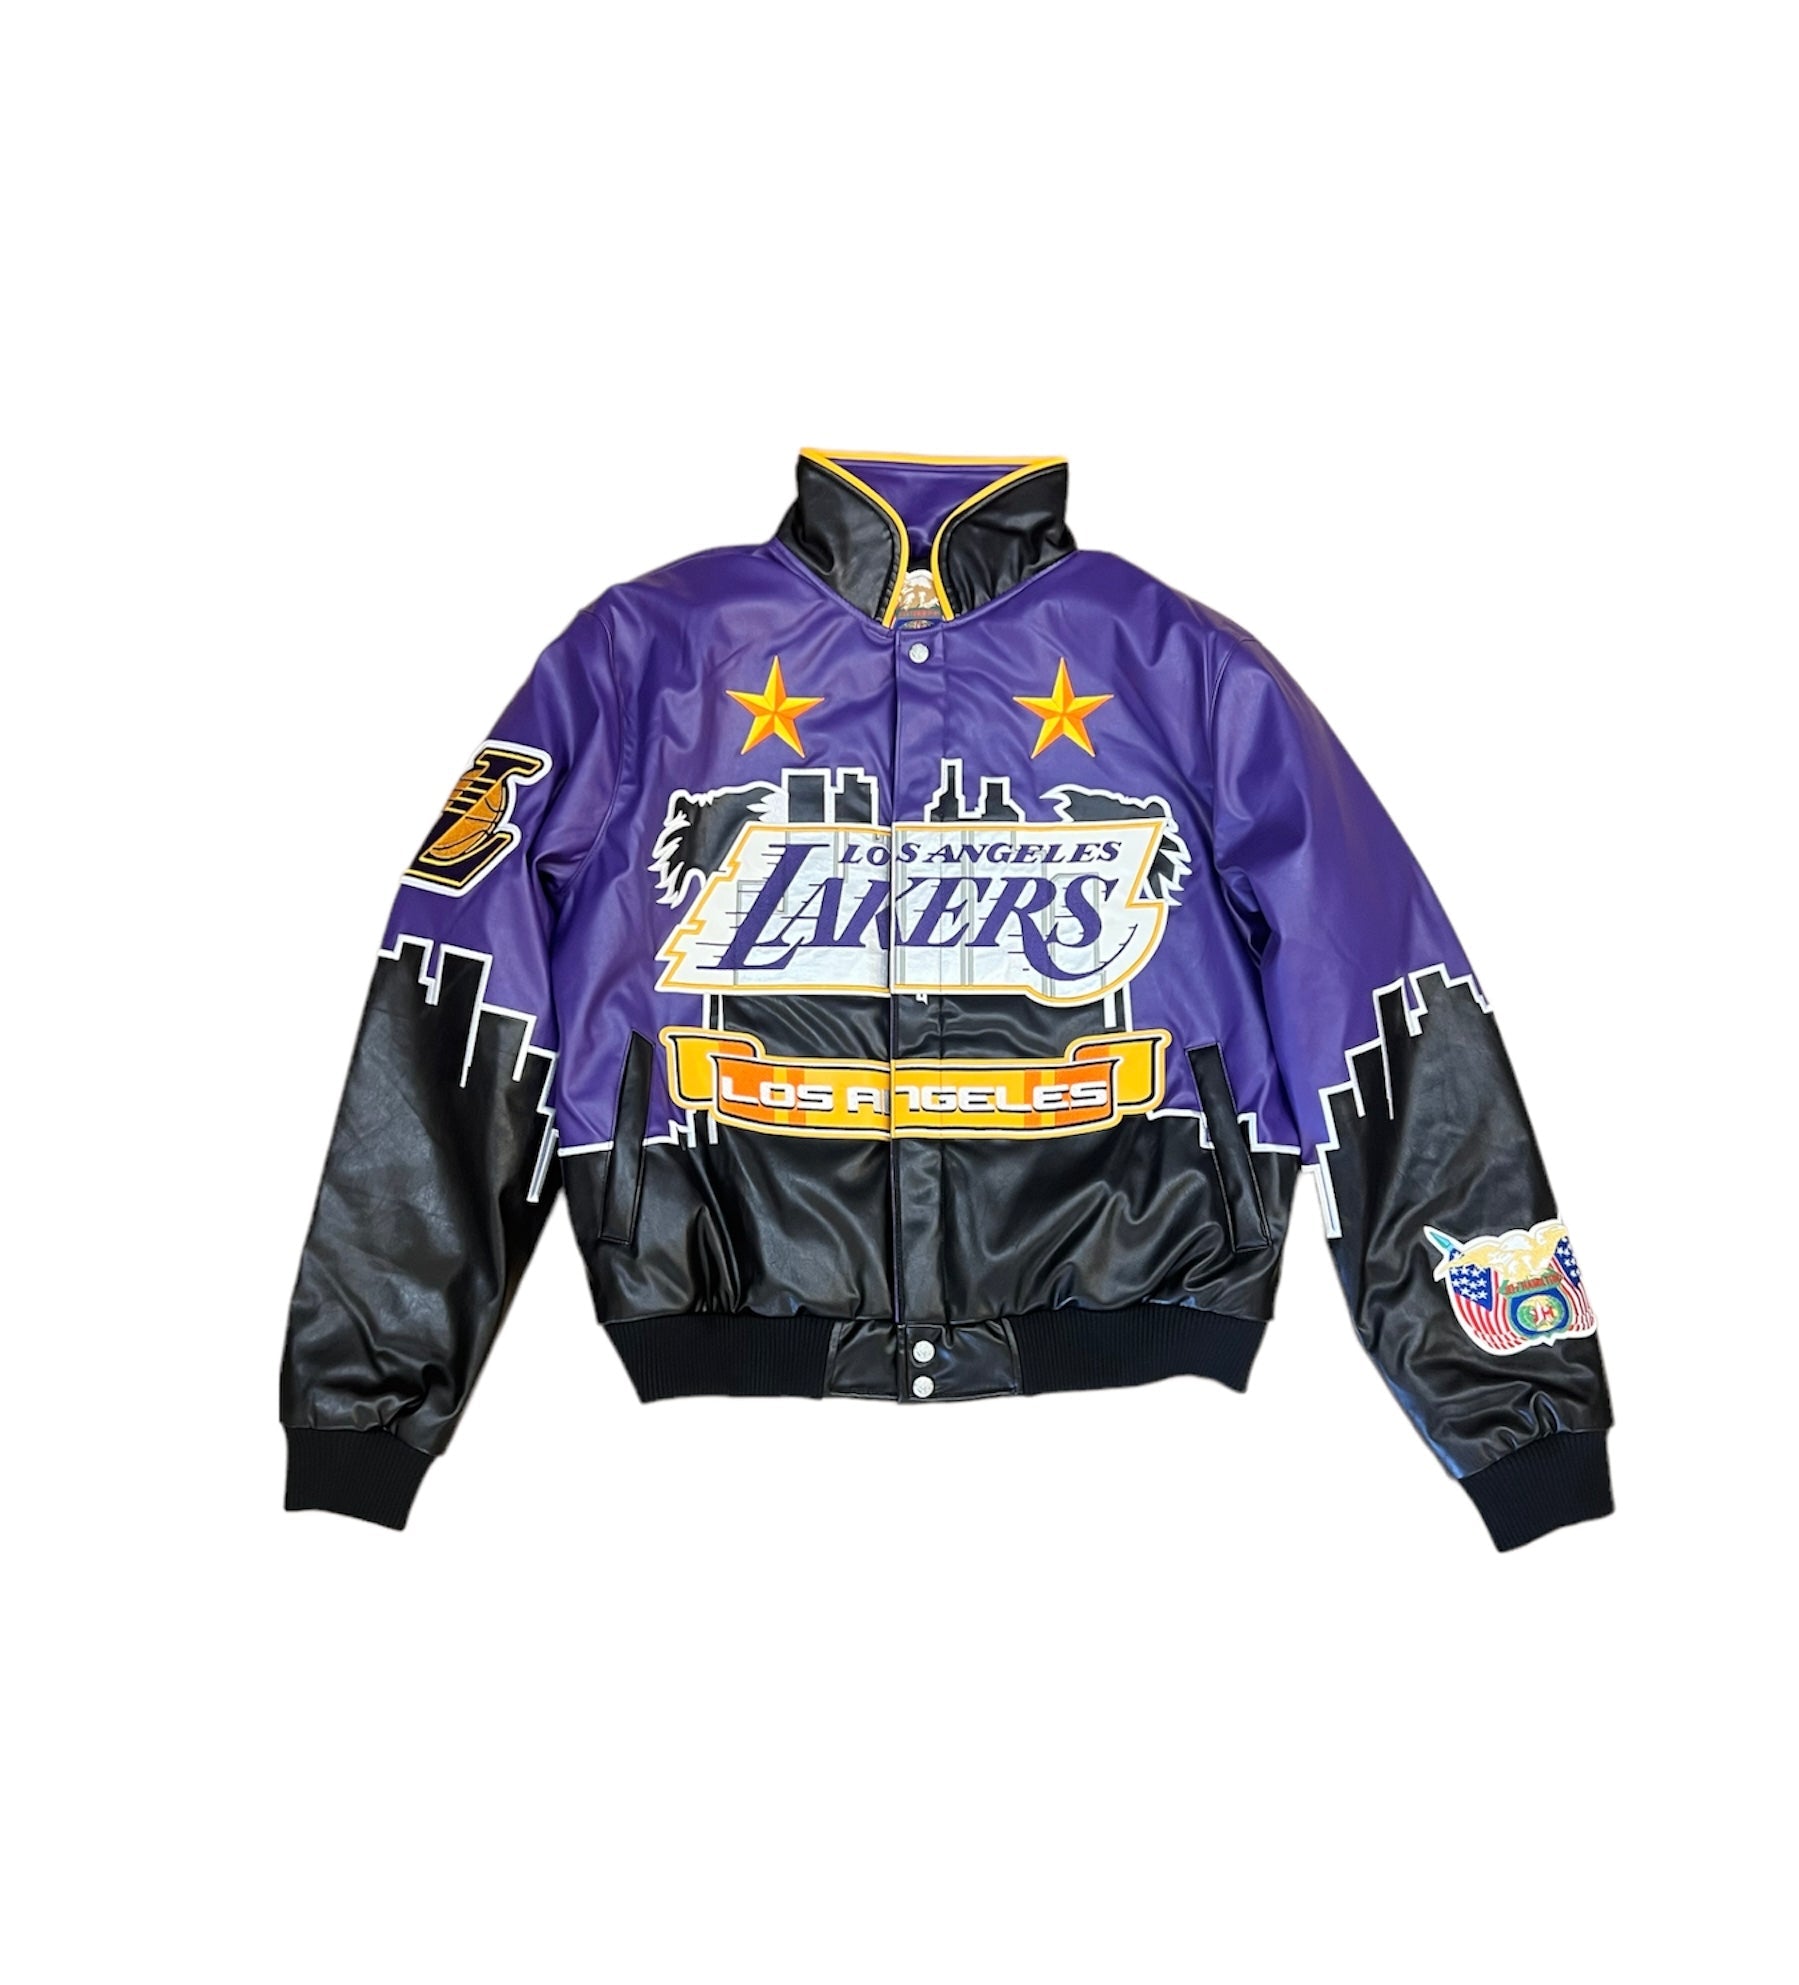 Jeff Hamilton Limited Edition Lakers Leather Jacket, Size 2X